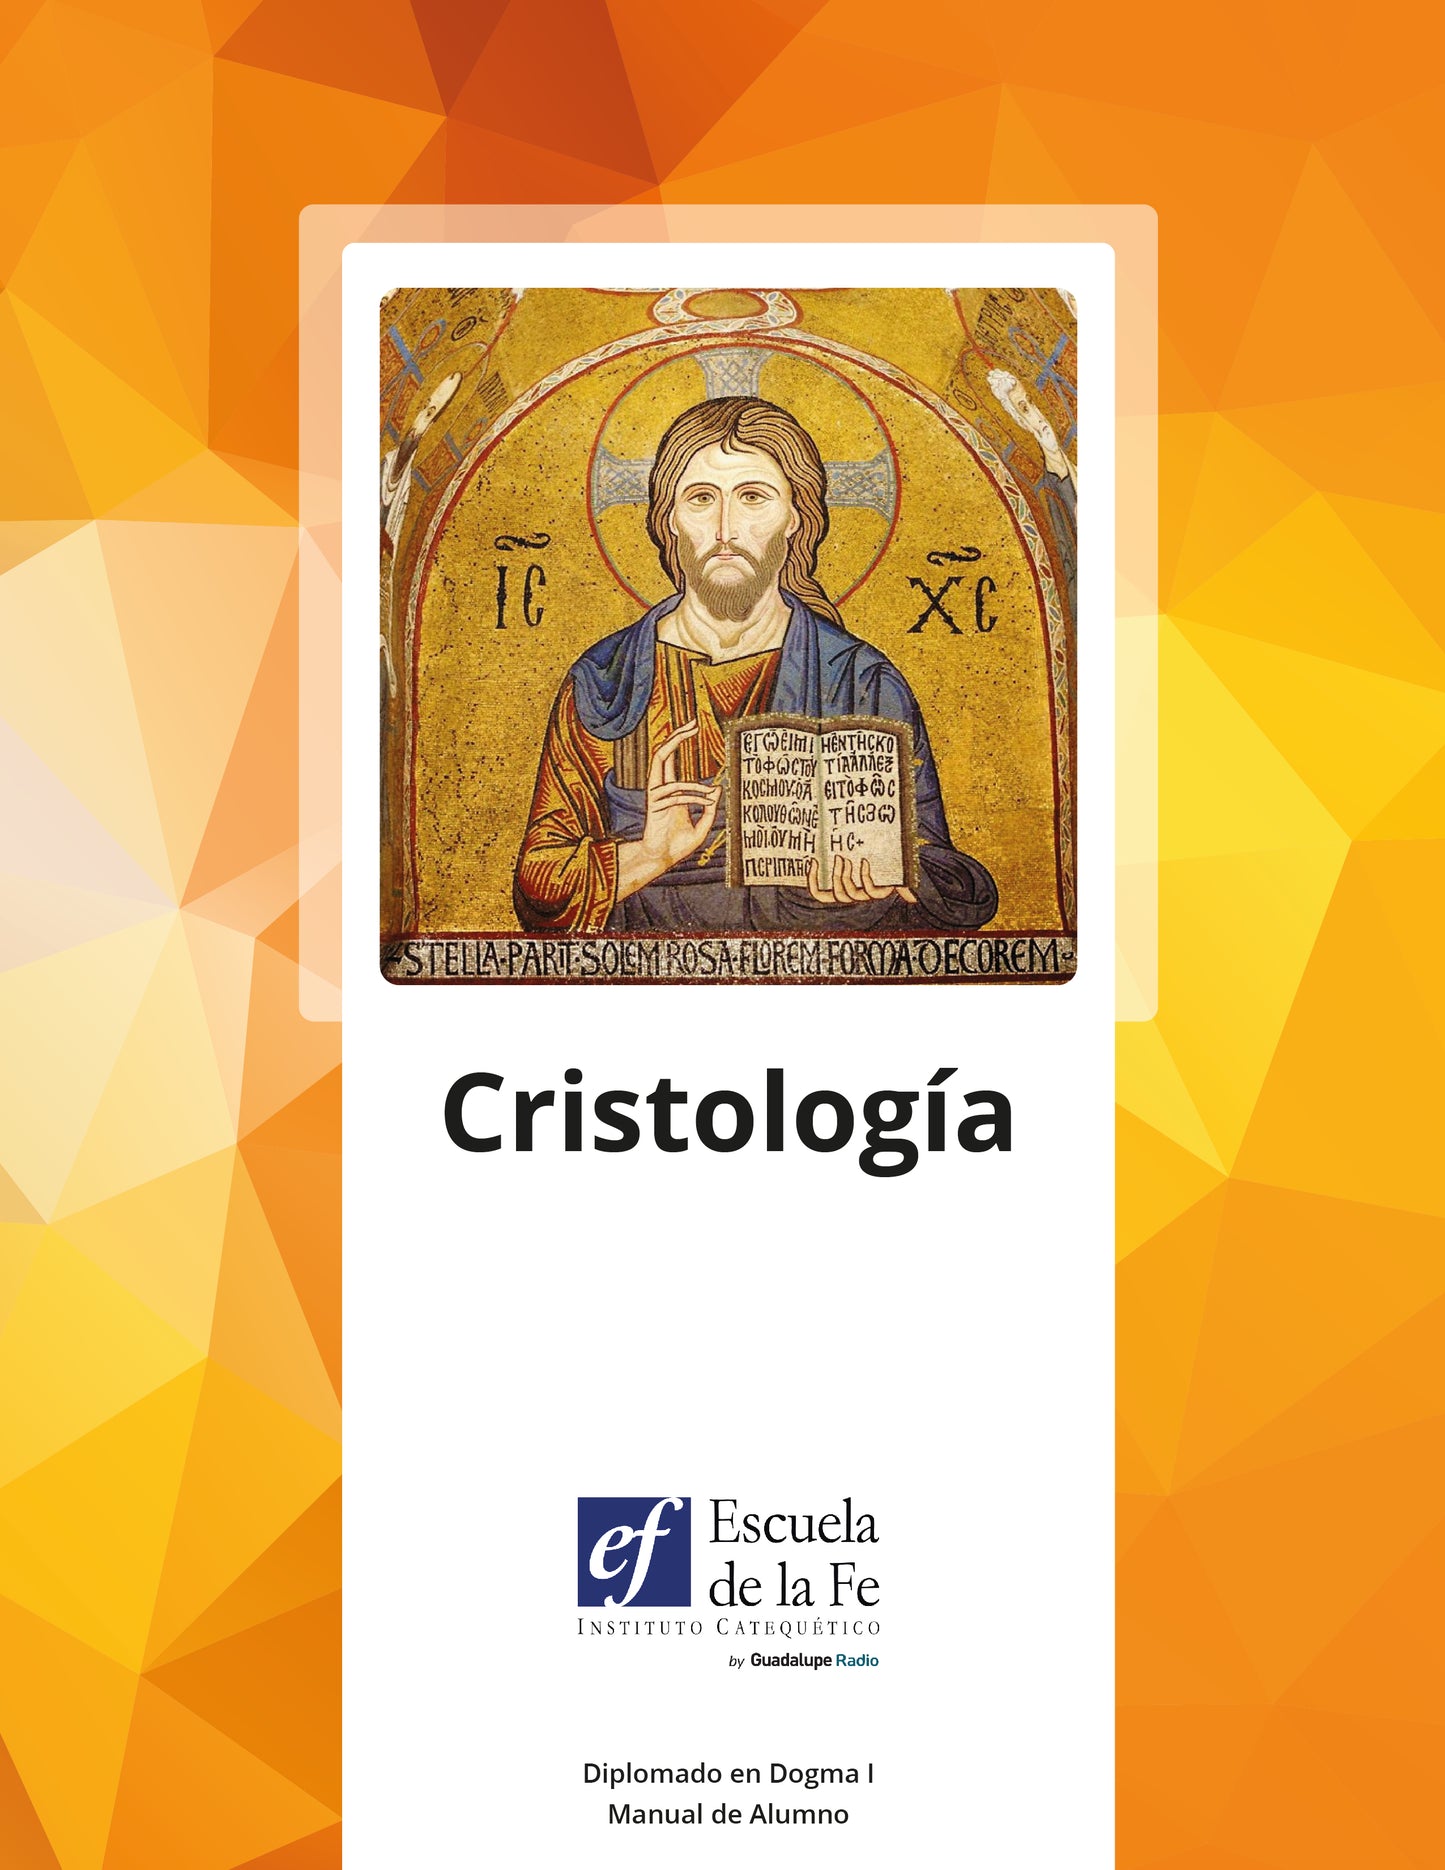 Libro Impreso: Cristología- Escuela de Fe